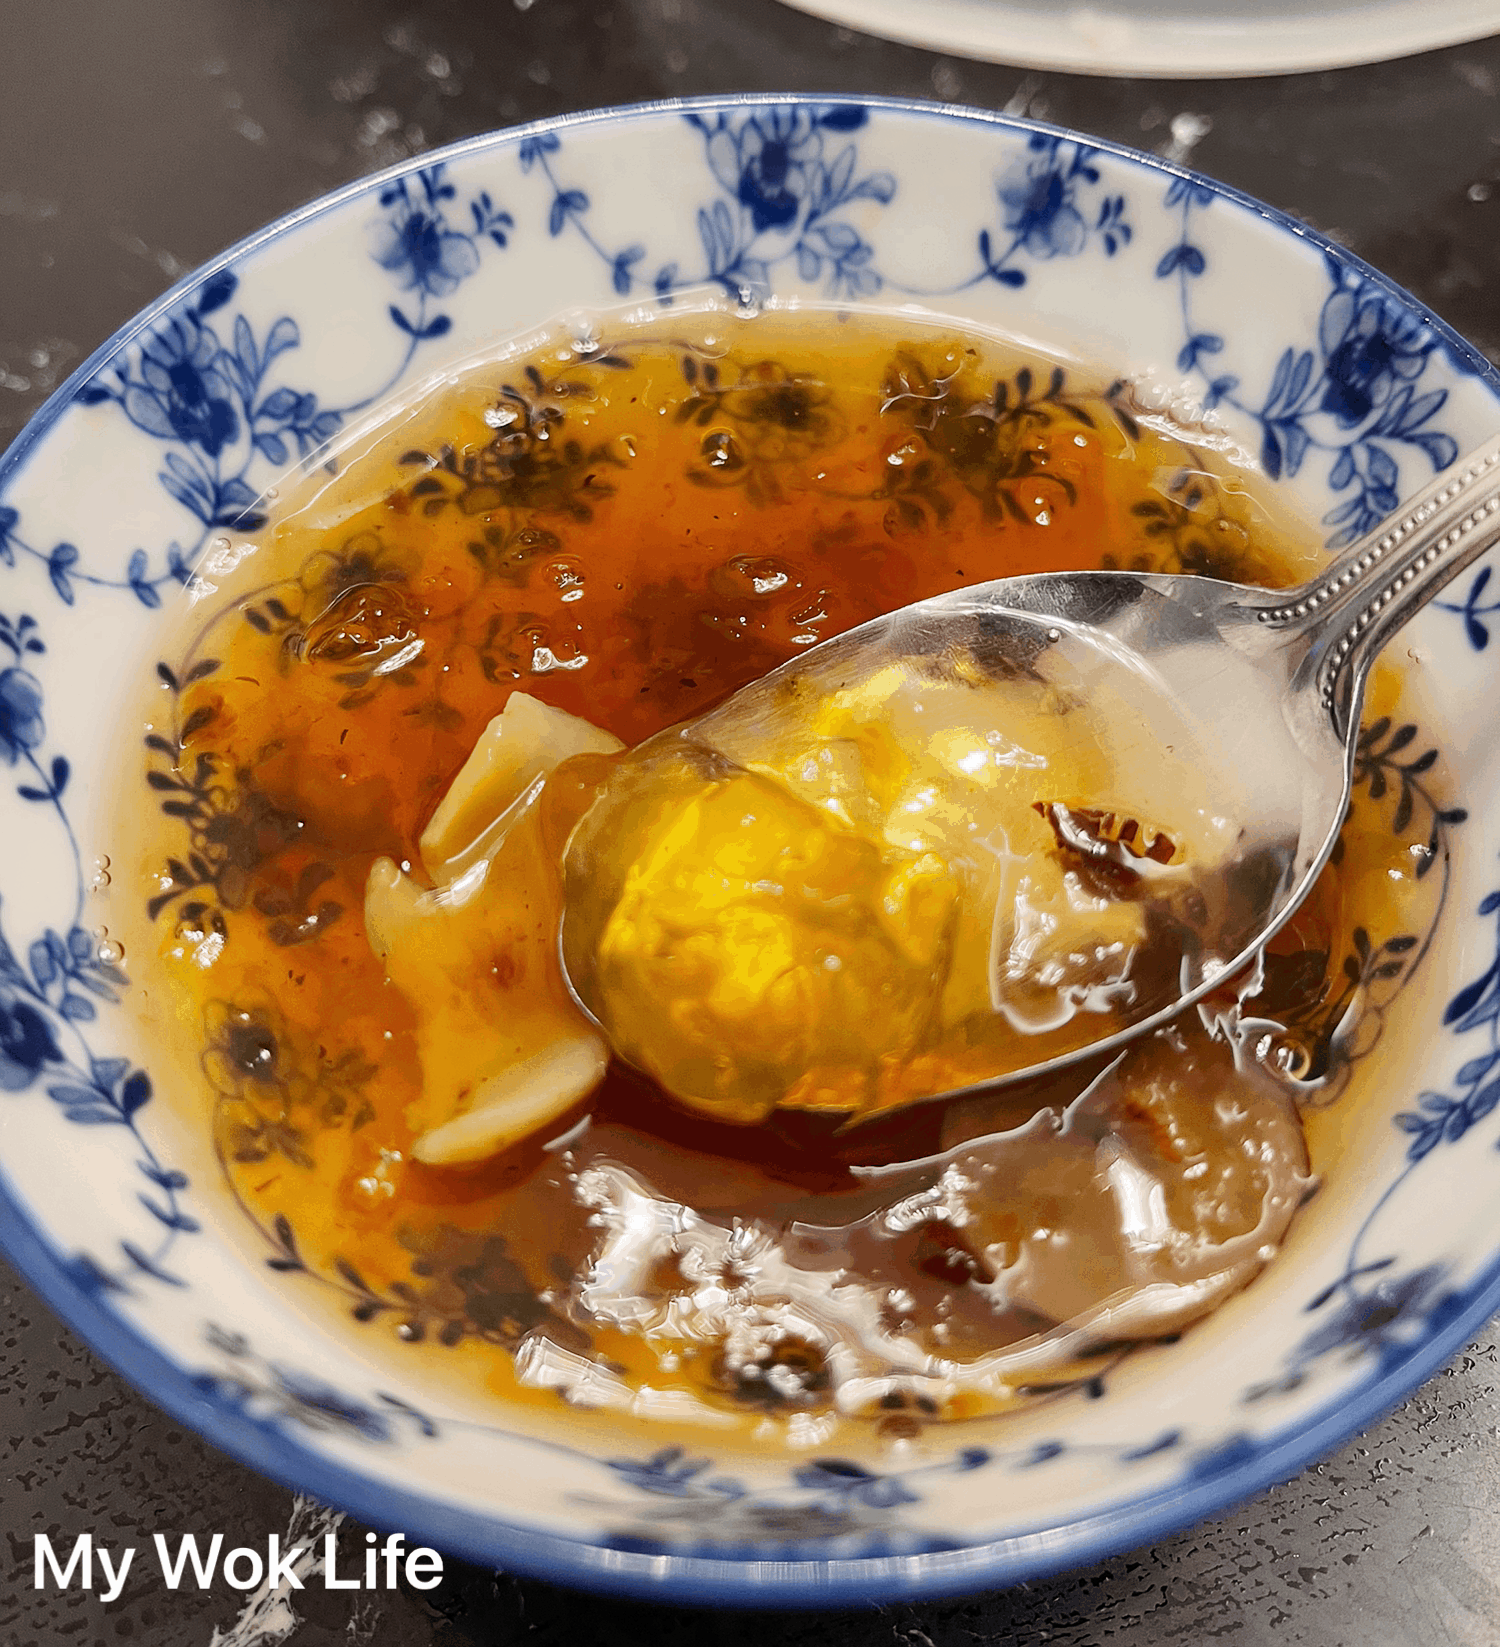 My Wok Life Cooking Blog - Easy Peach Gum & Snow Lotus Seed Dessert Soup Recipe (桃胶雪莲子糖水) - Lotus Seed Dessert Soup Recipe